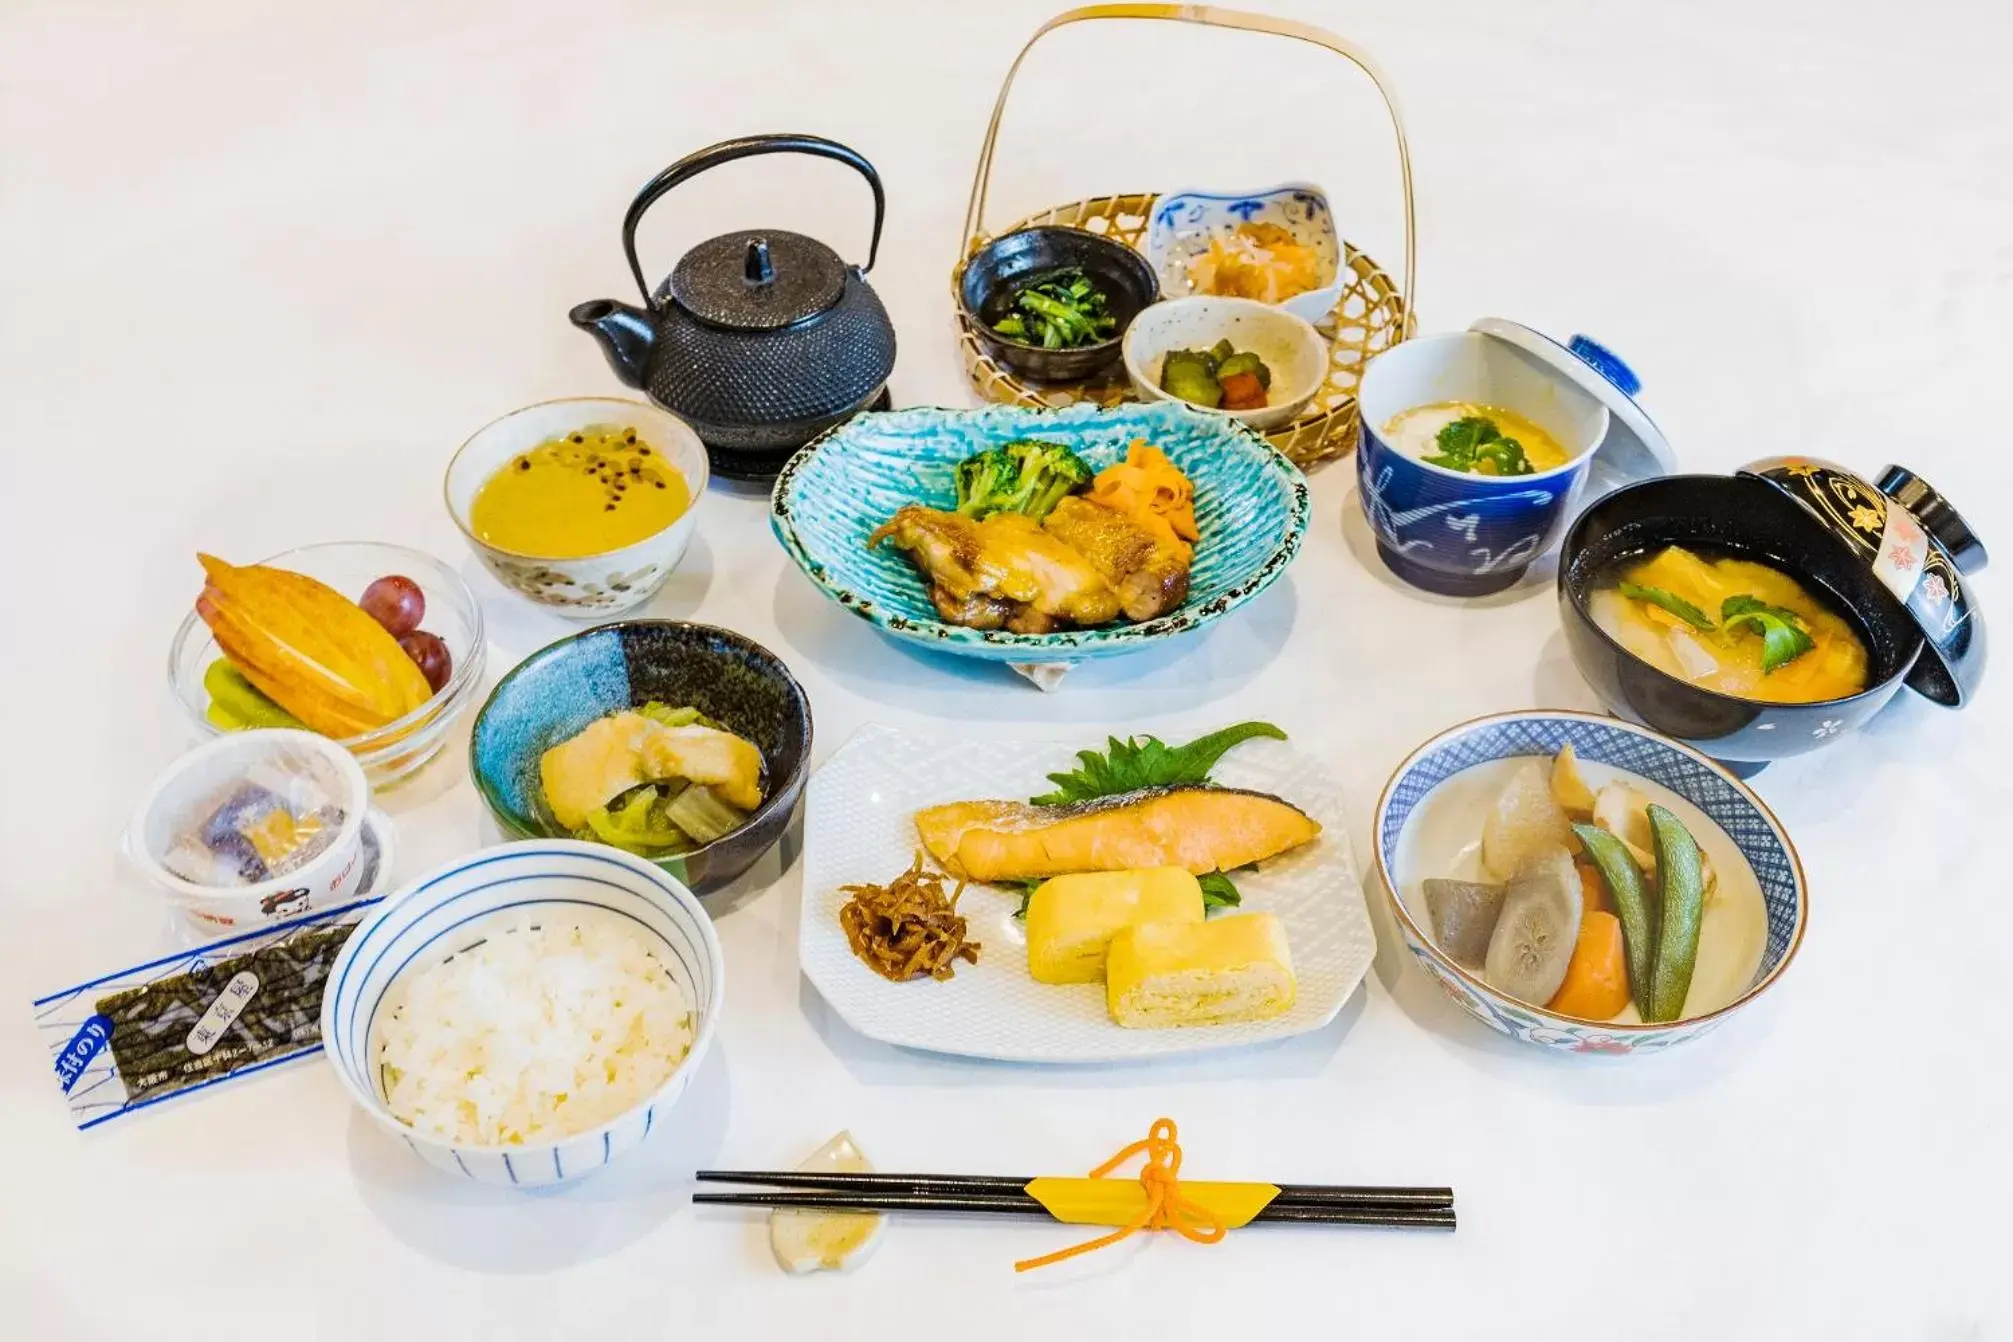 Food and drinks in The Bridge Hotel Shinsaibashi